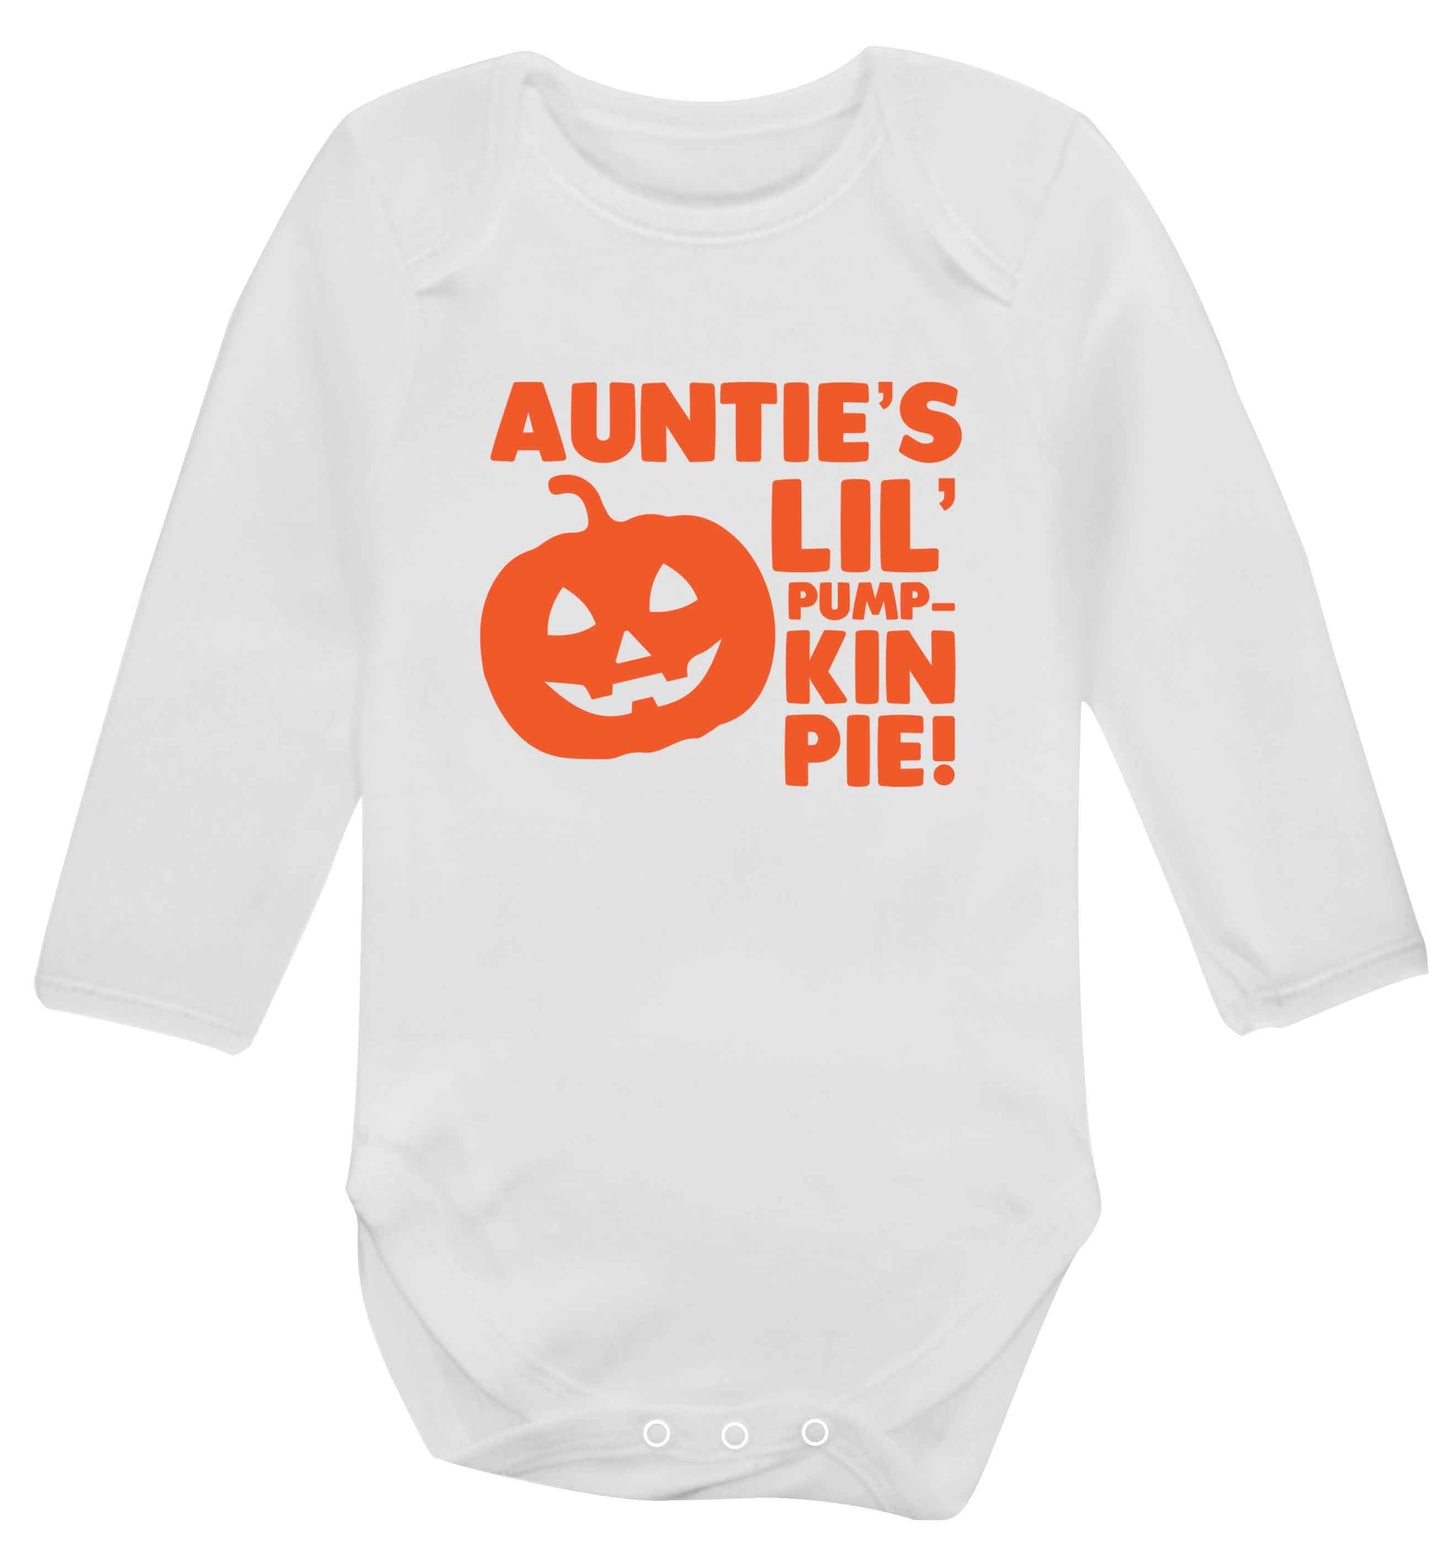 Auntie's lil' pumpkin pie baby vest long sleeved white 6-12 months